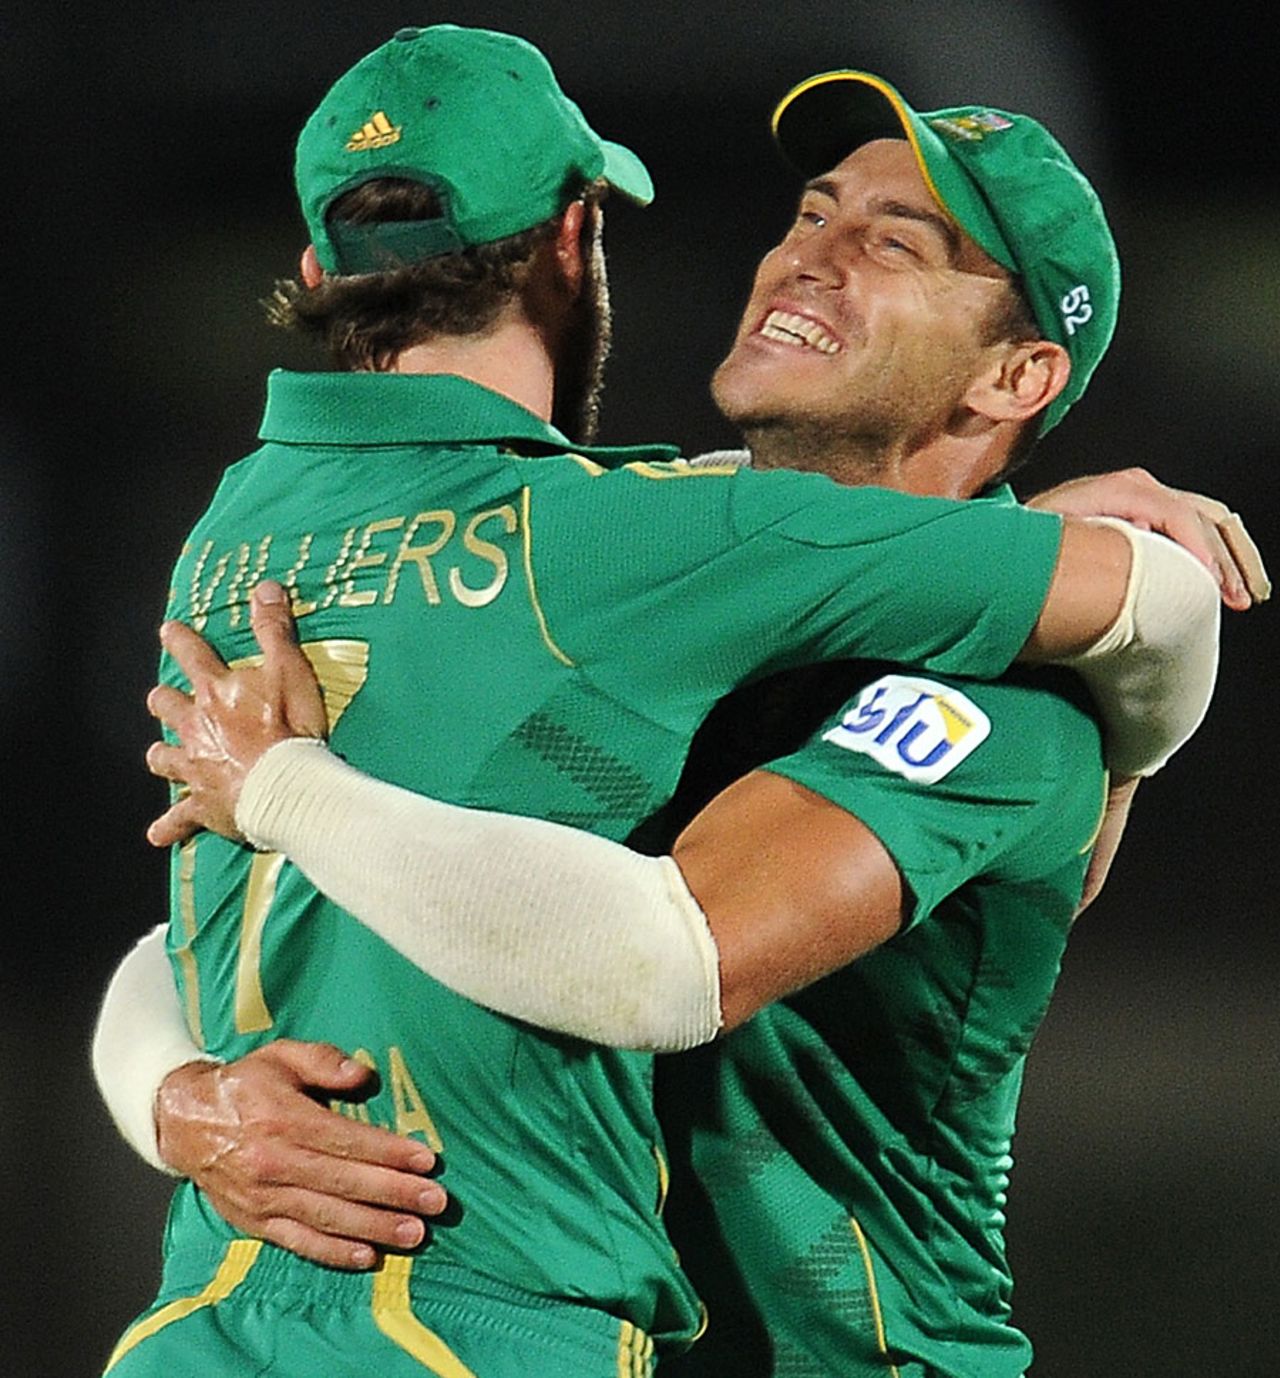 AB de Villiers and Faf du Plessis embrace after a wicket falls, Sri Lanka v South Africa, 3rd T20, Hambantota, August 6, 2013